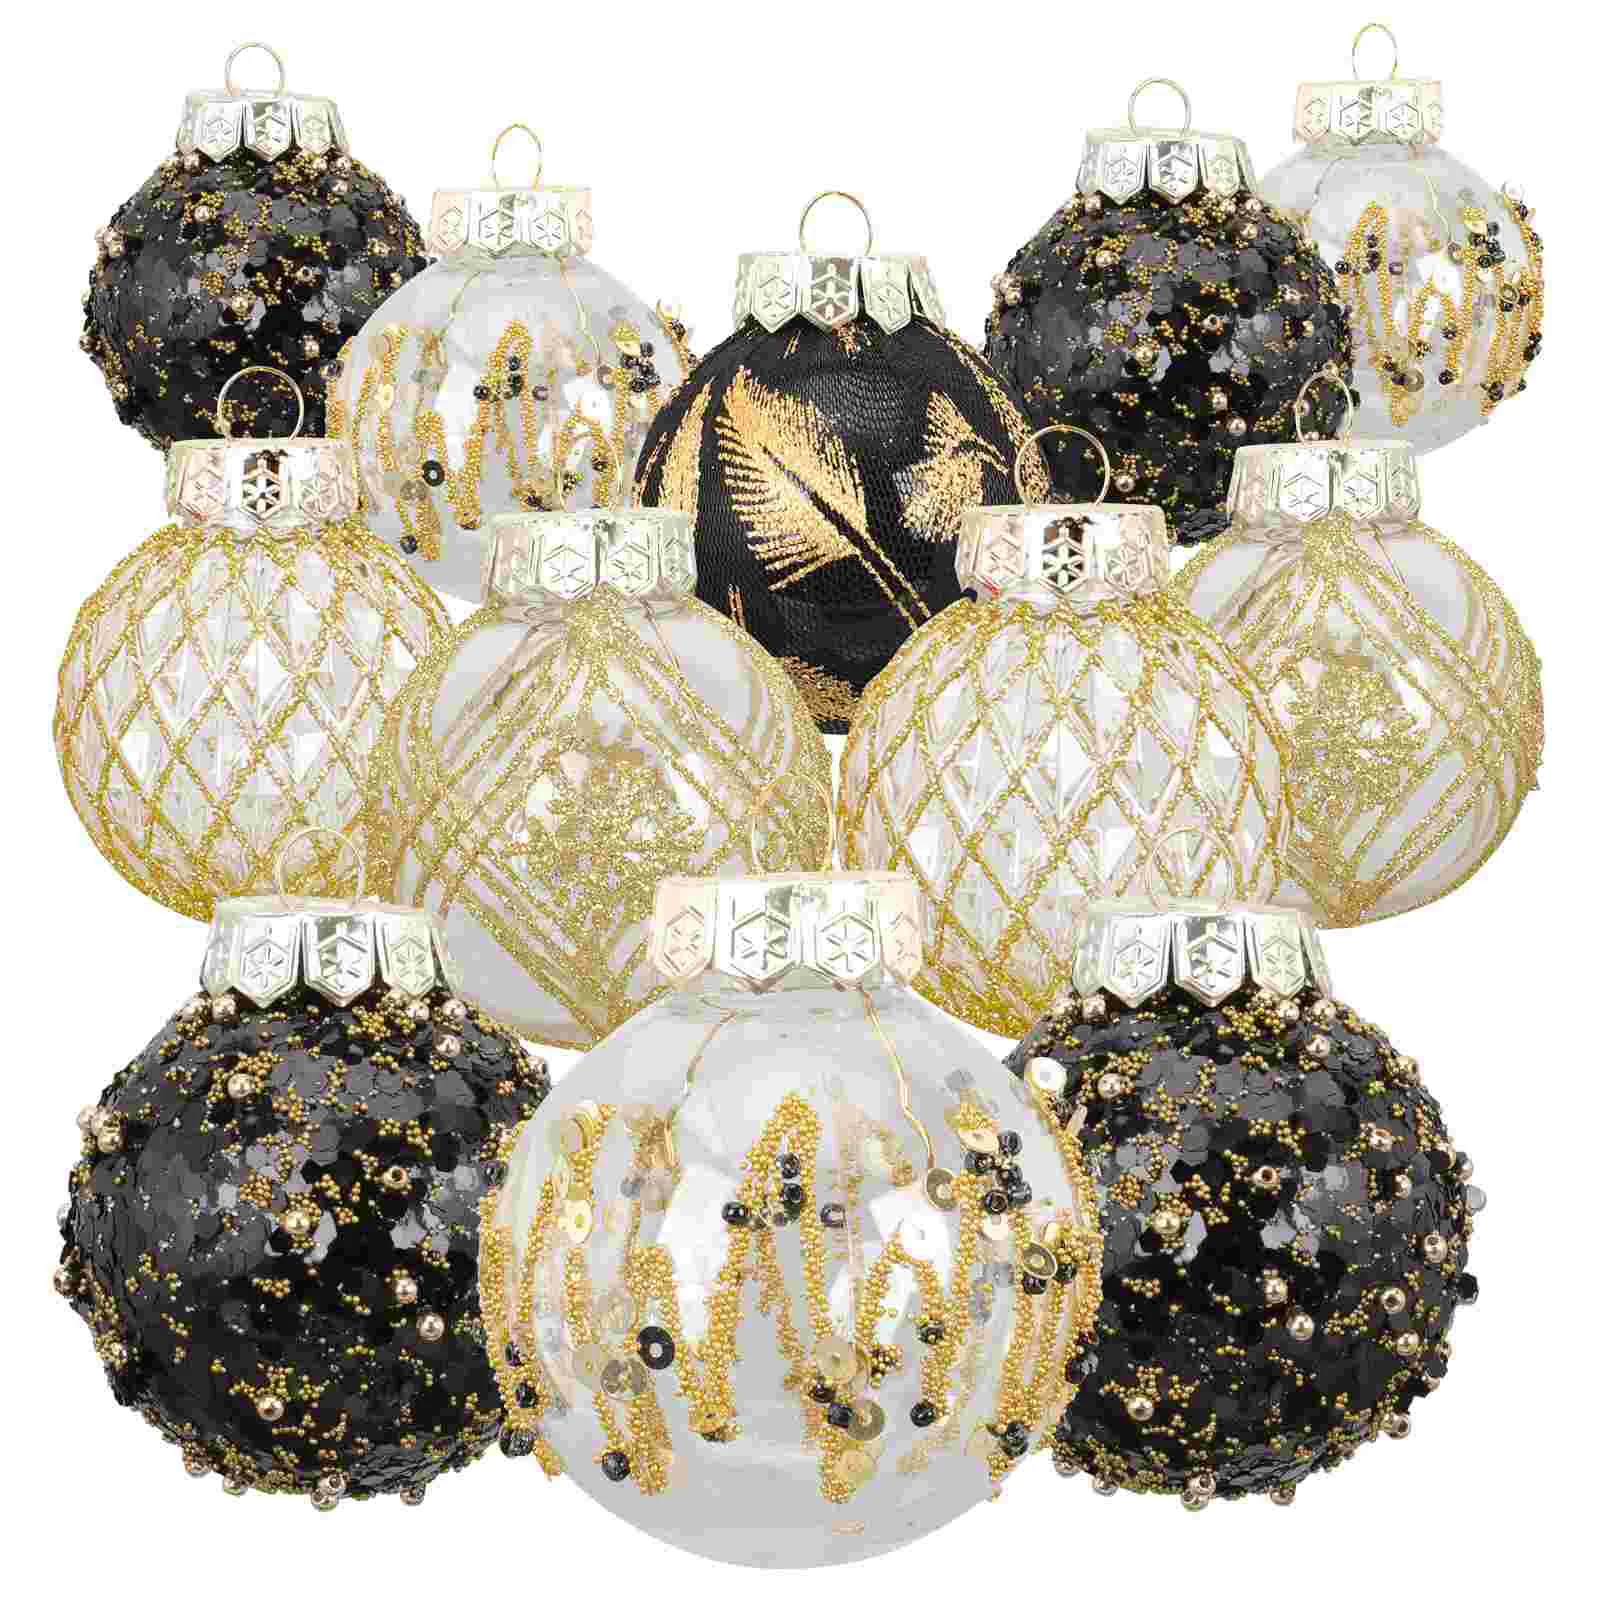 

Christmas Ball Ornaments Xmas Shatterproof Balls Christmas Tree Decorations Colorful Hanging Bauble Xmas Adornments